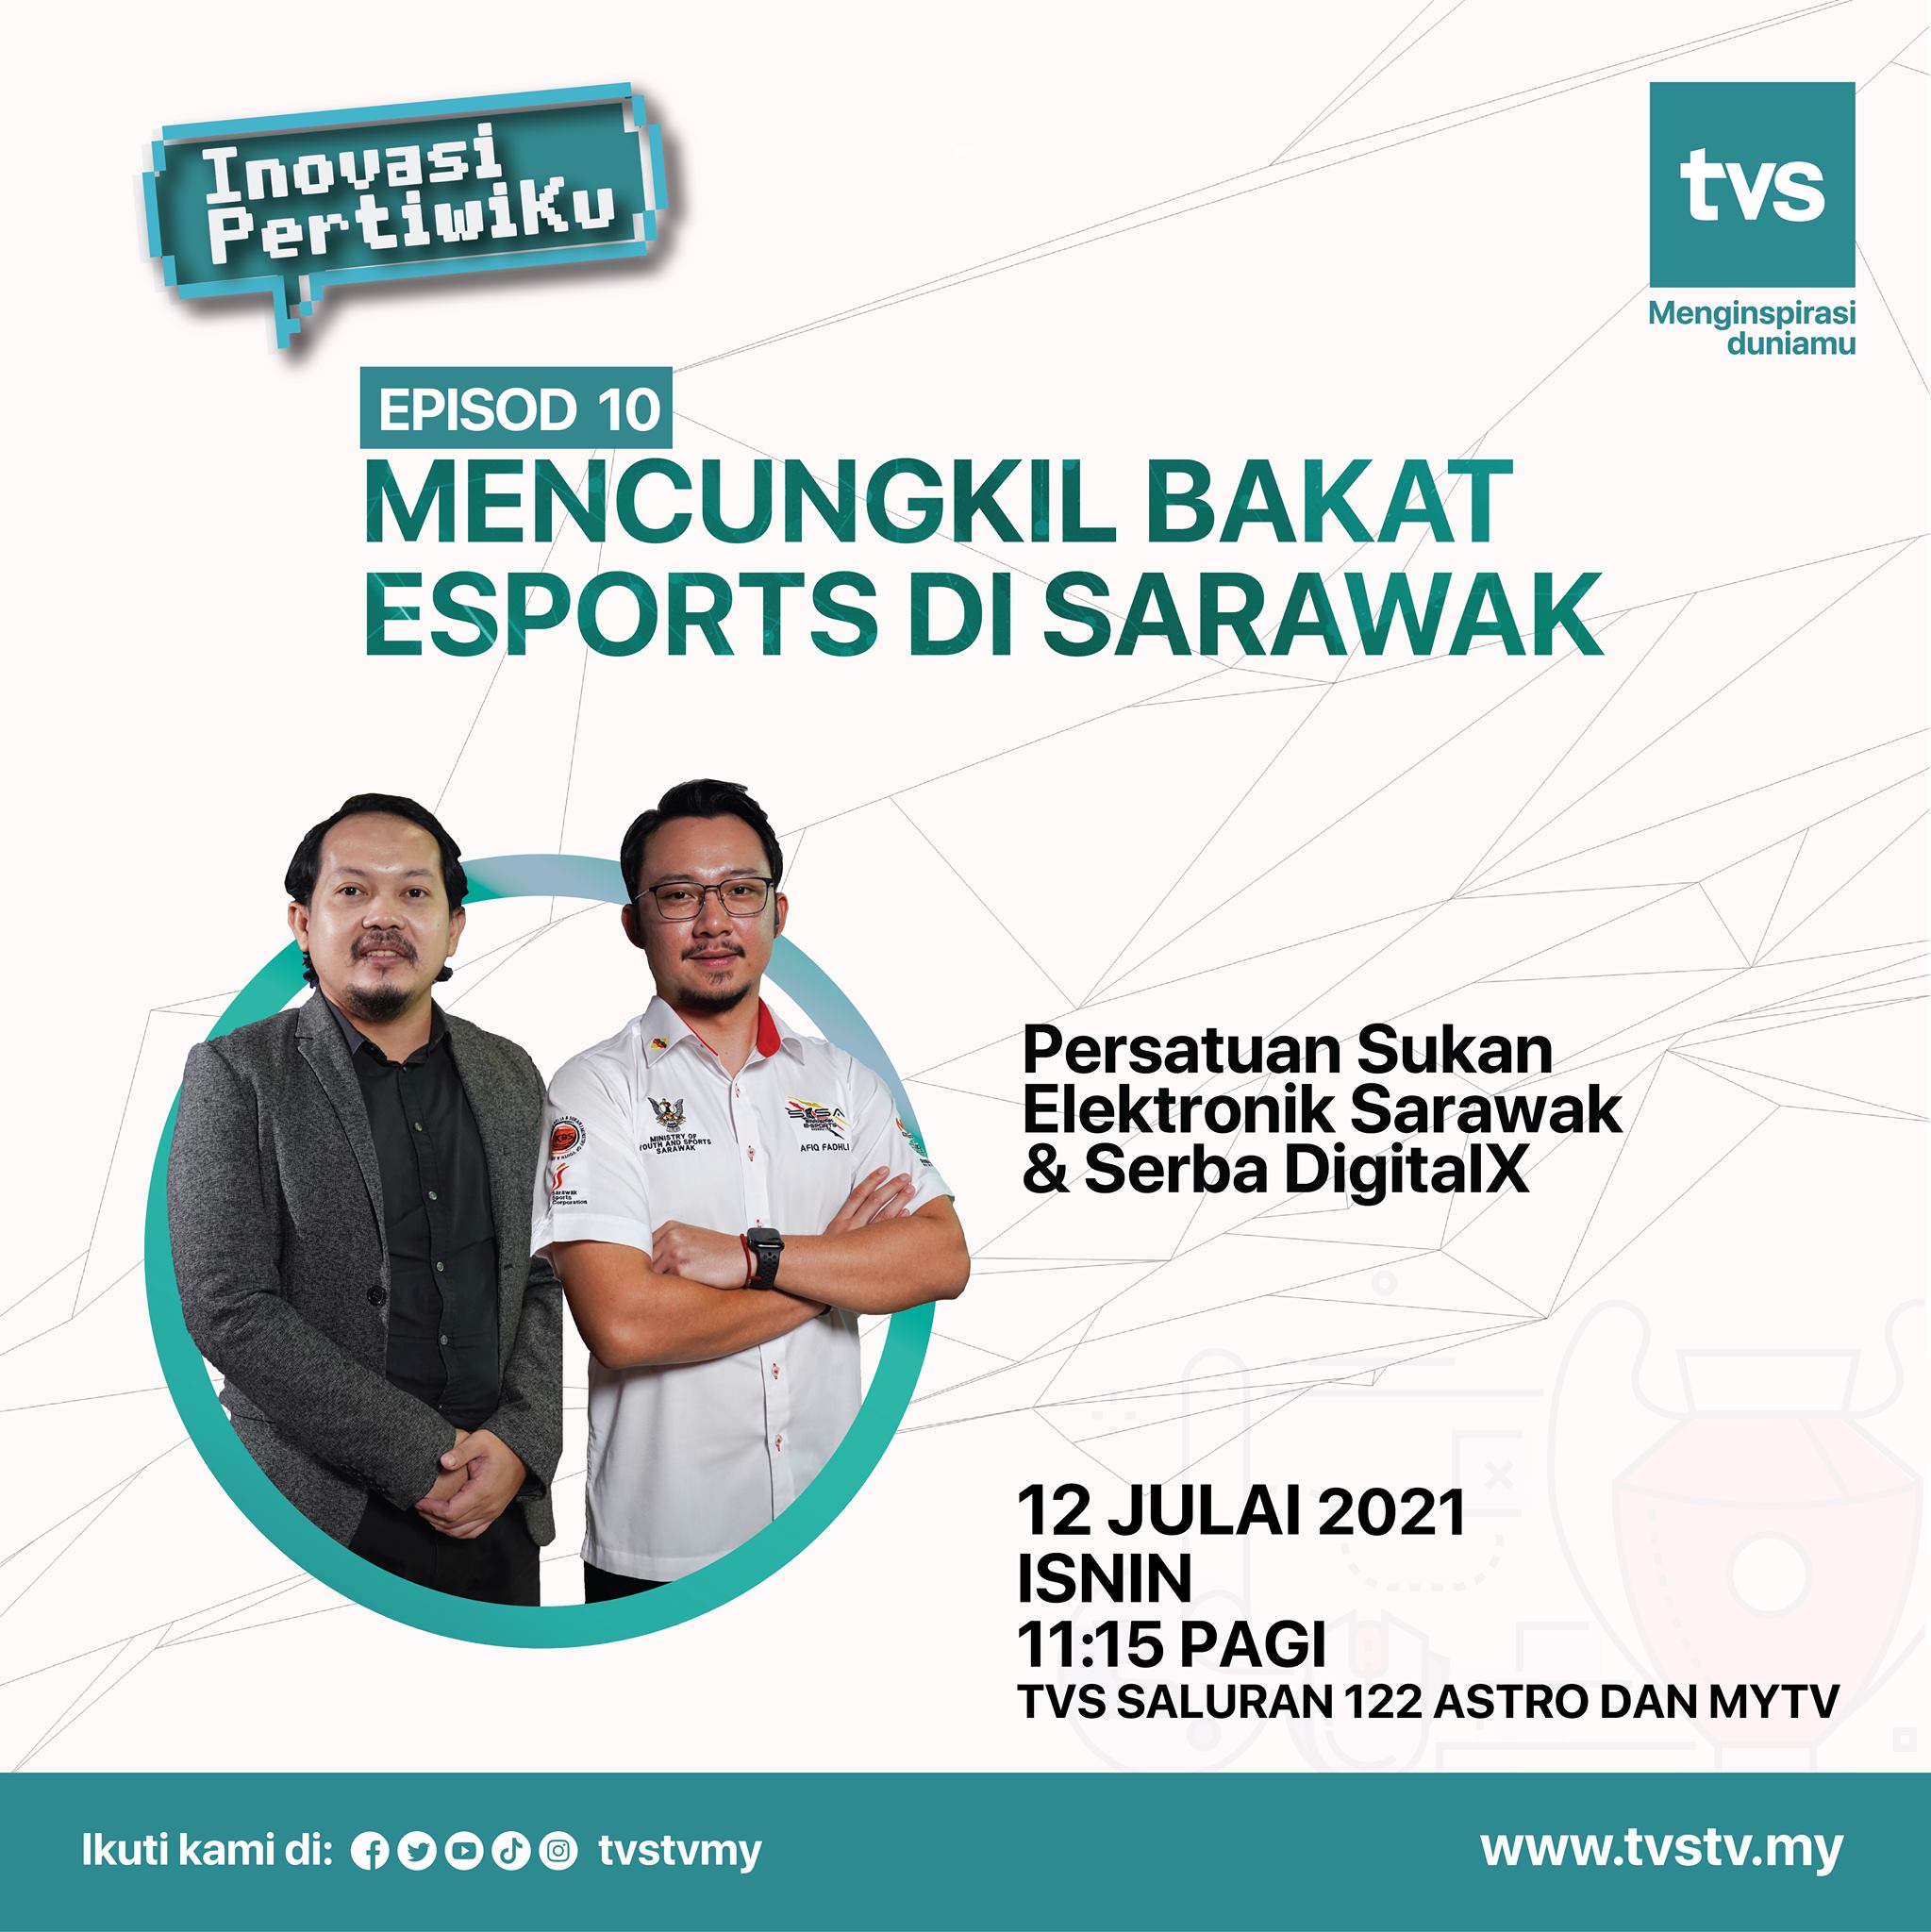 [PROMO] Mencungkil Bakat ESports Di Sarawak | Episod 10 – Inovasi Pertiwiku Musim 2